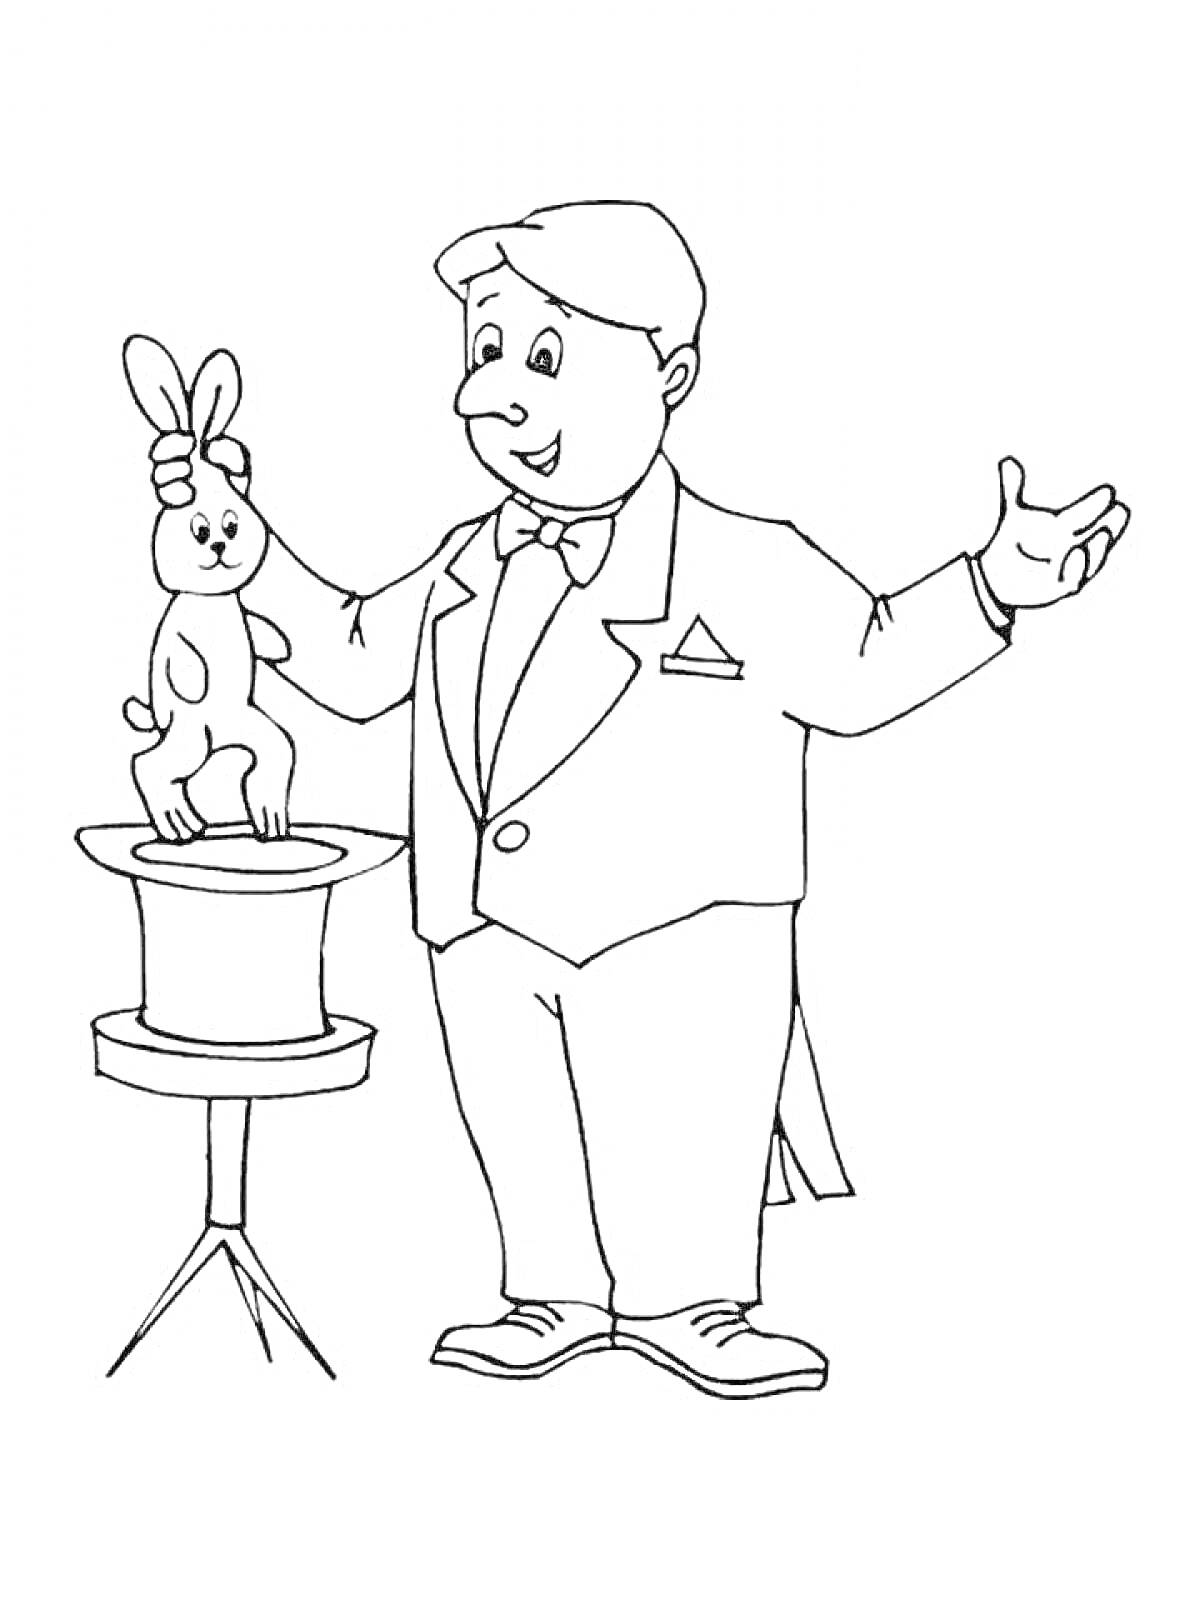 Раскраска Фокусник с кроликом и цилиндром на столе